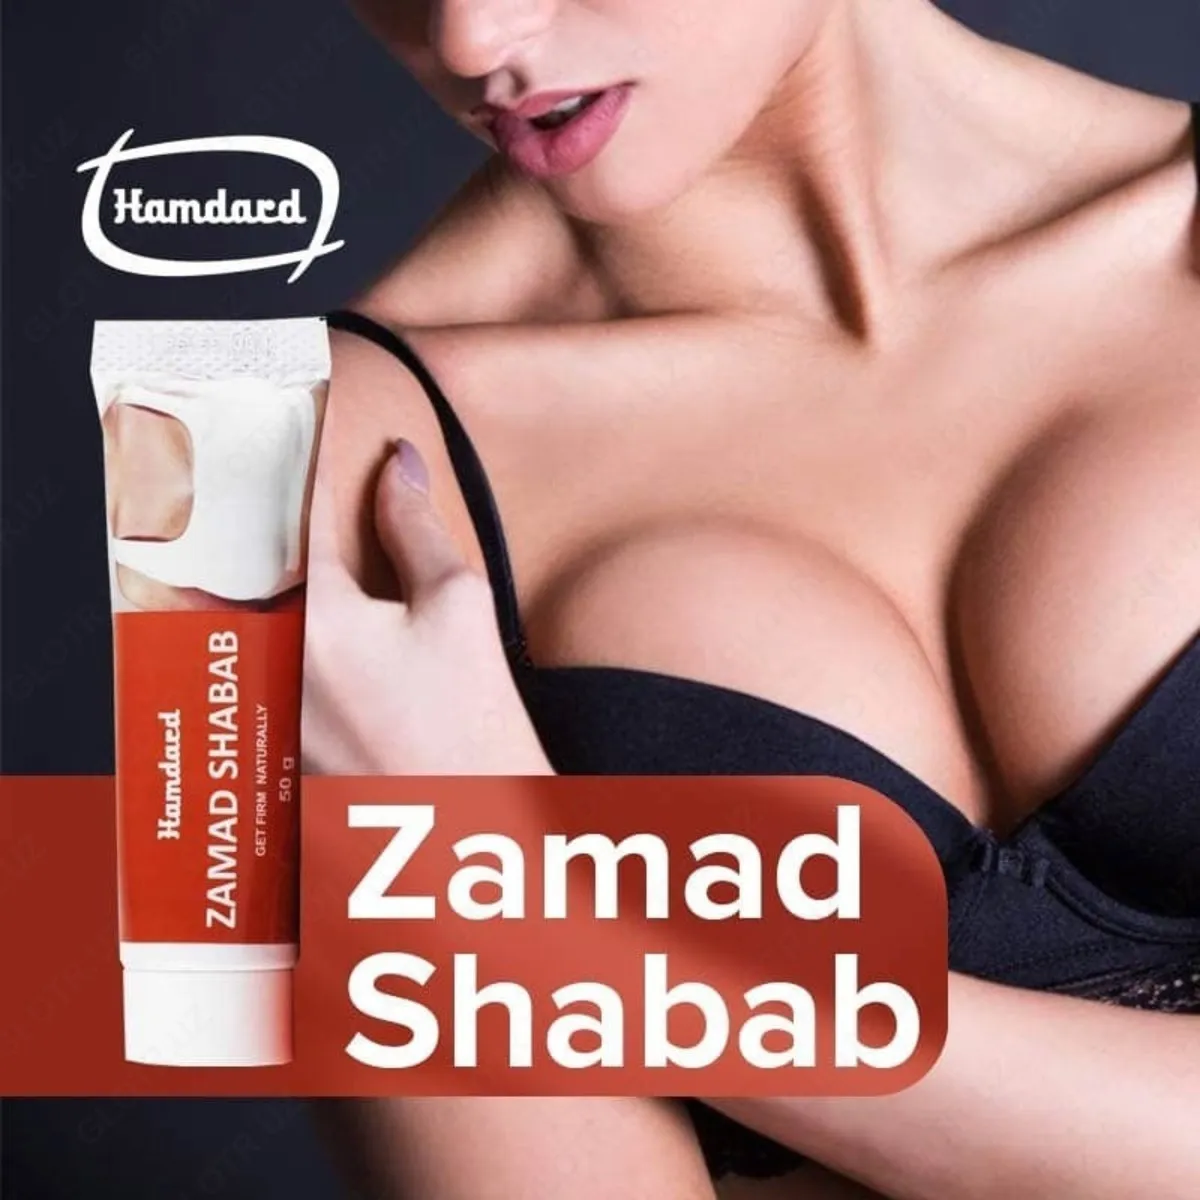 Крем для упругости груди "ZAMAD SHABAB"#1